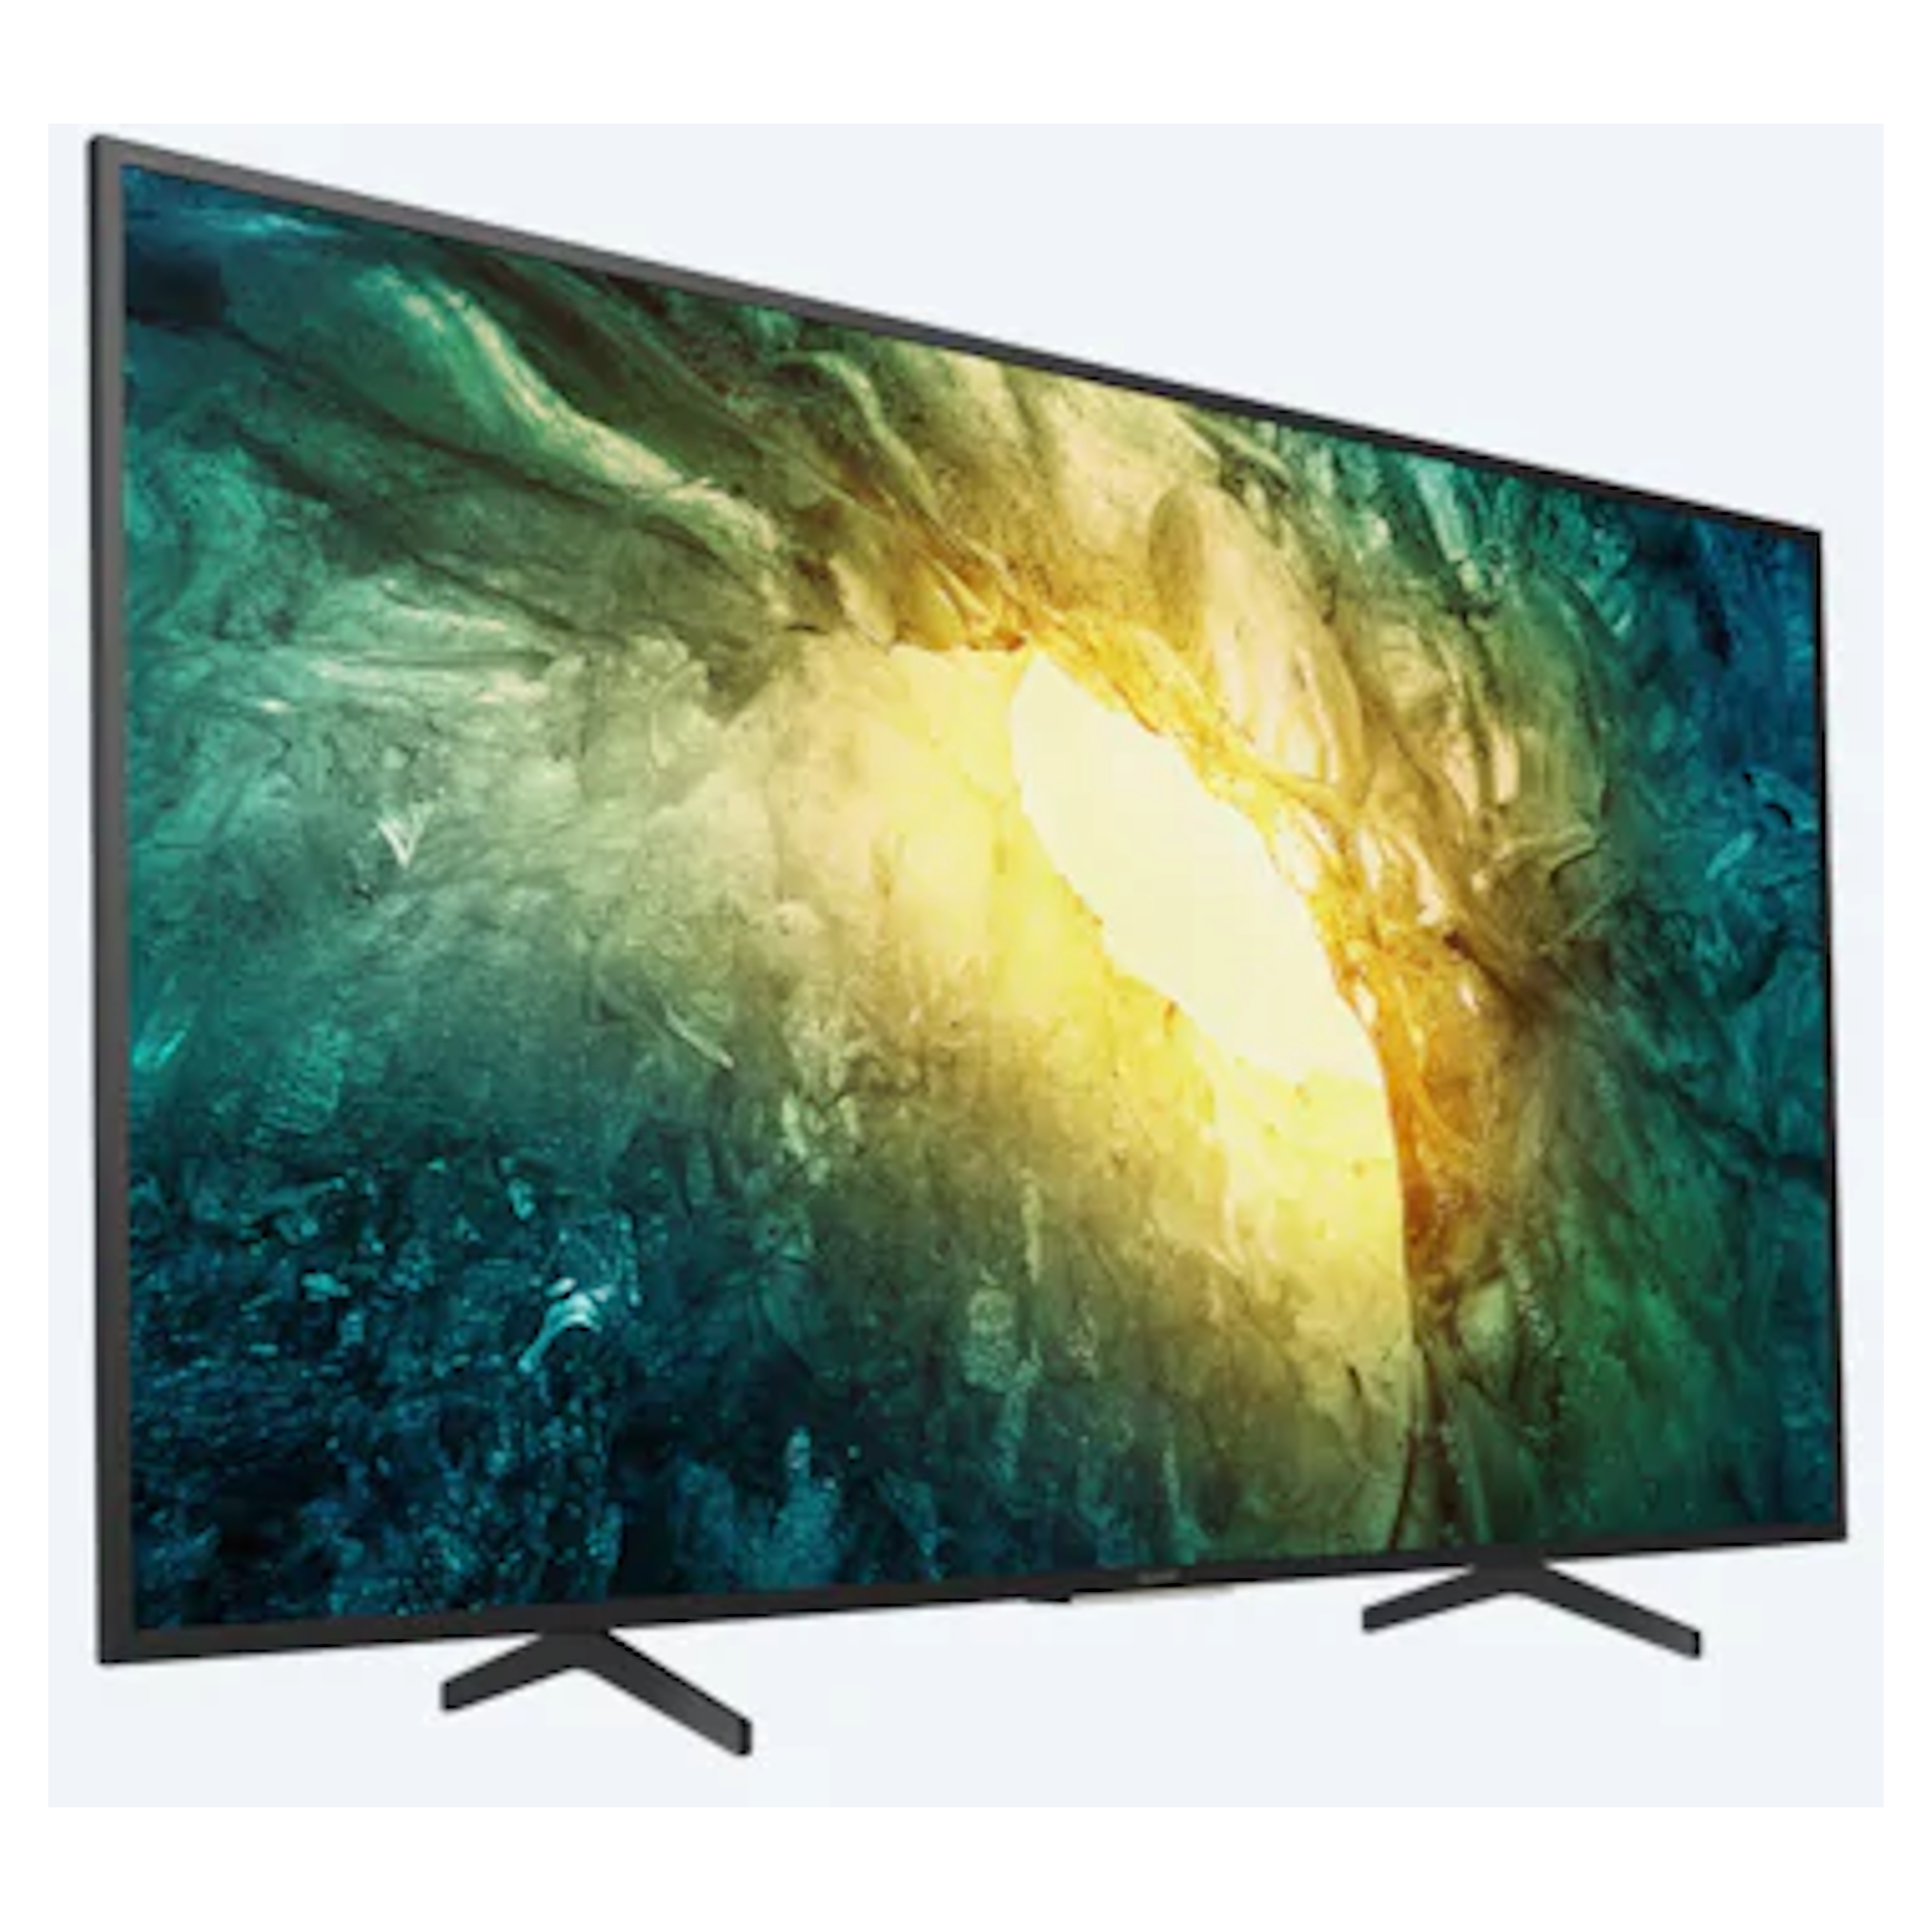 SONY LED TV 65 4K Ultra HD, High Dynamic Range (HDR), Smart TV (Android TV) 65X7500H